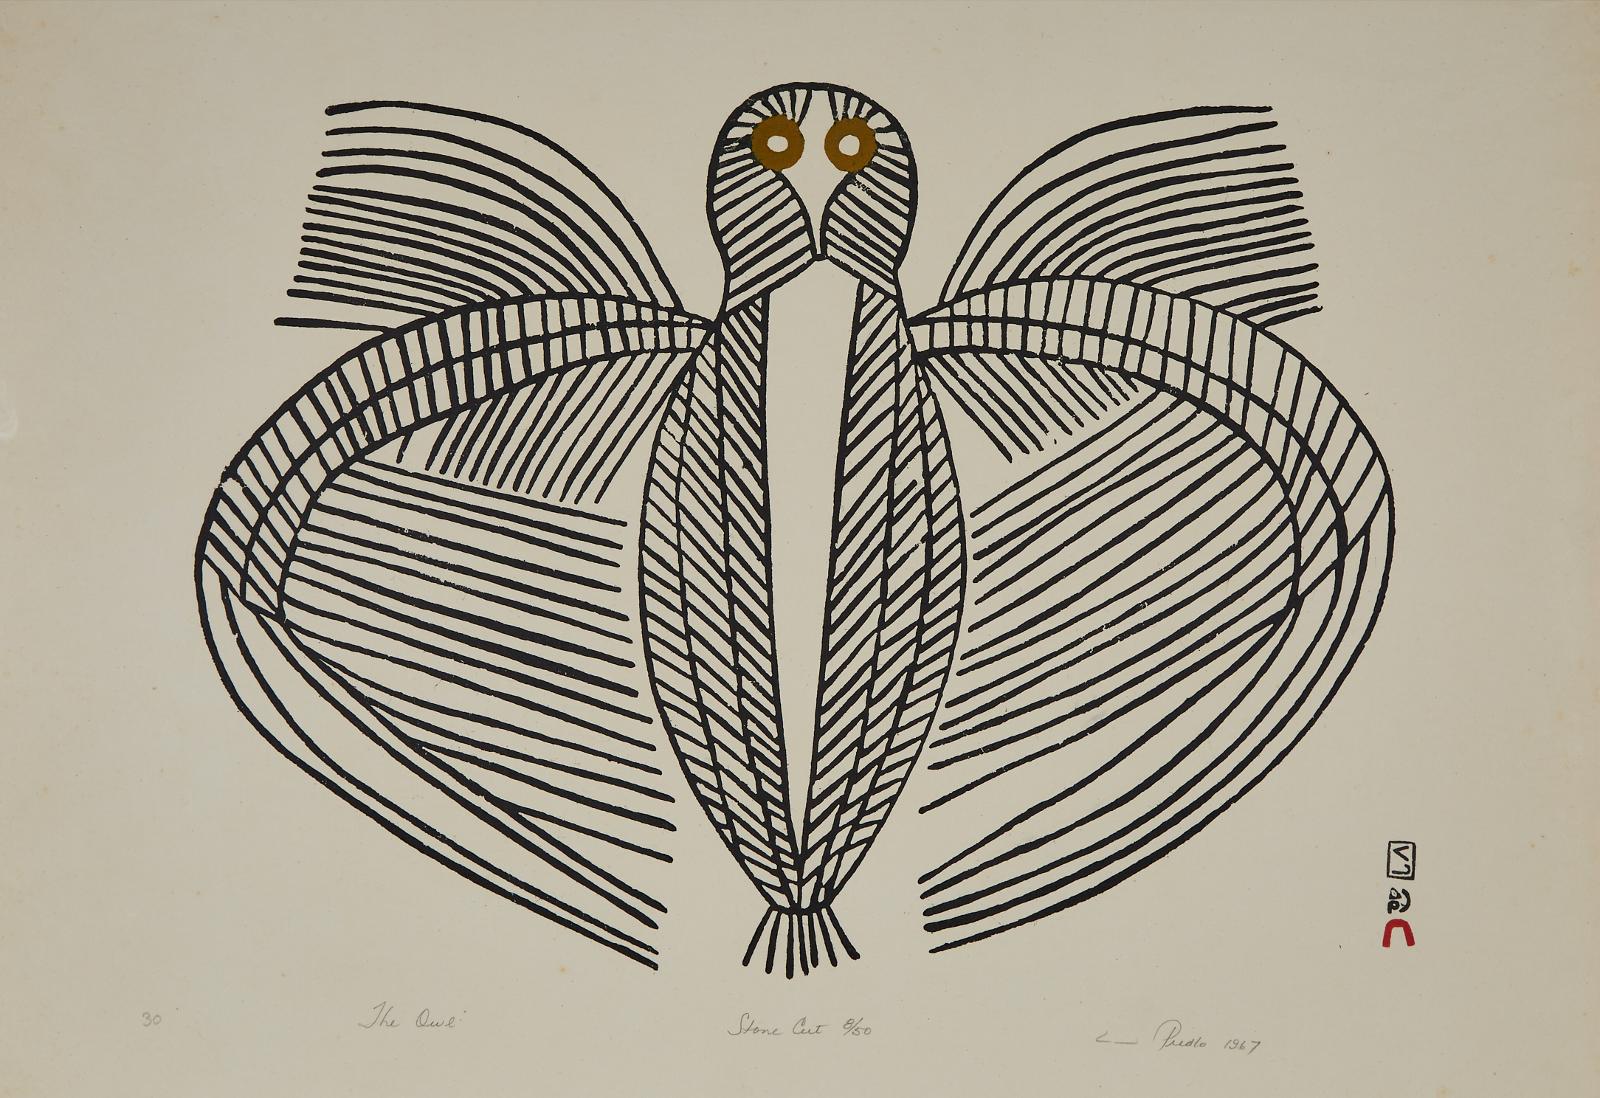 Pudlo Pudlat (1916-1992) - The Owl